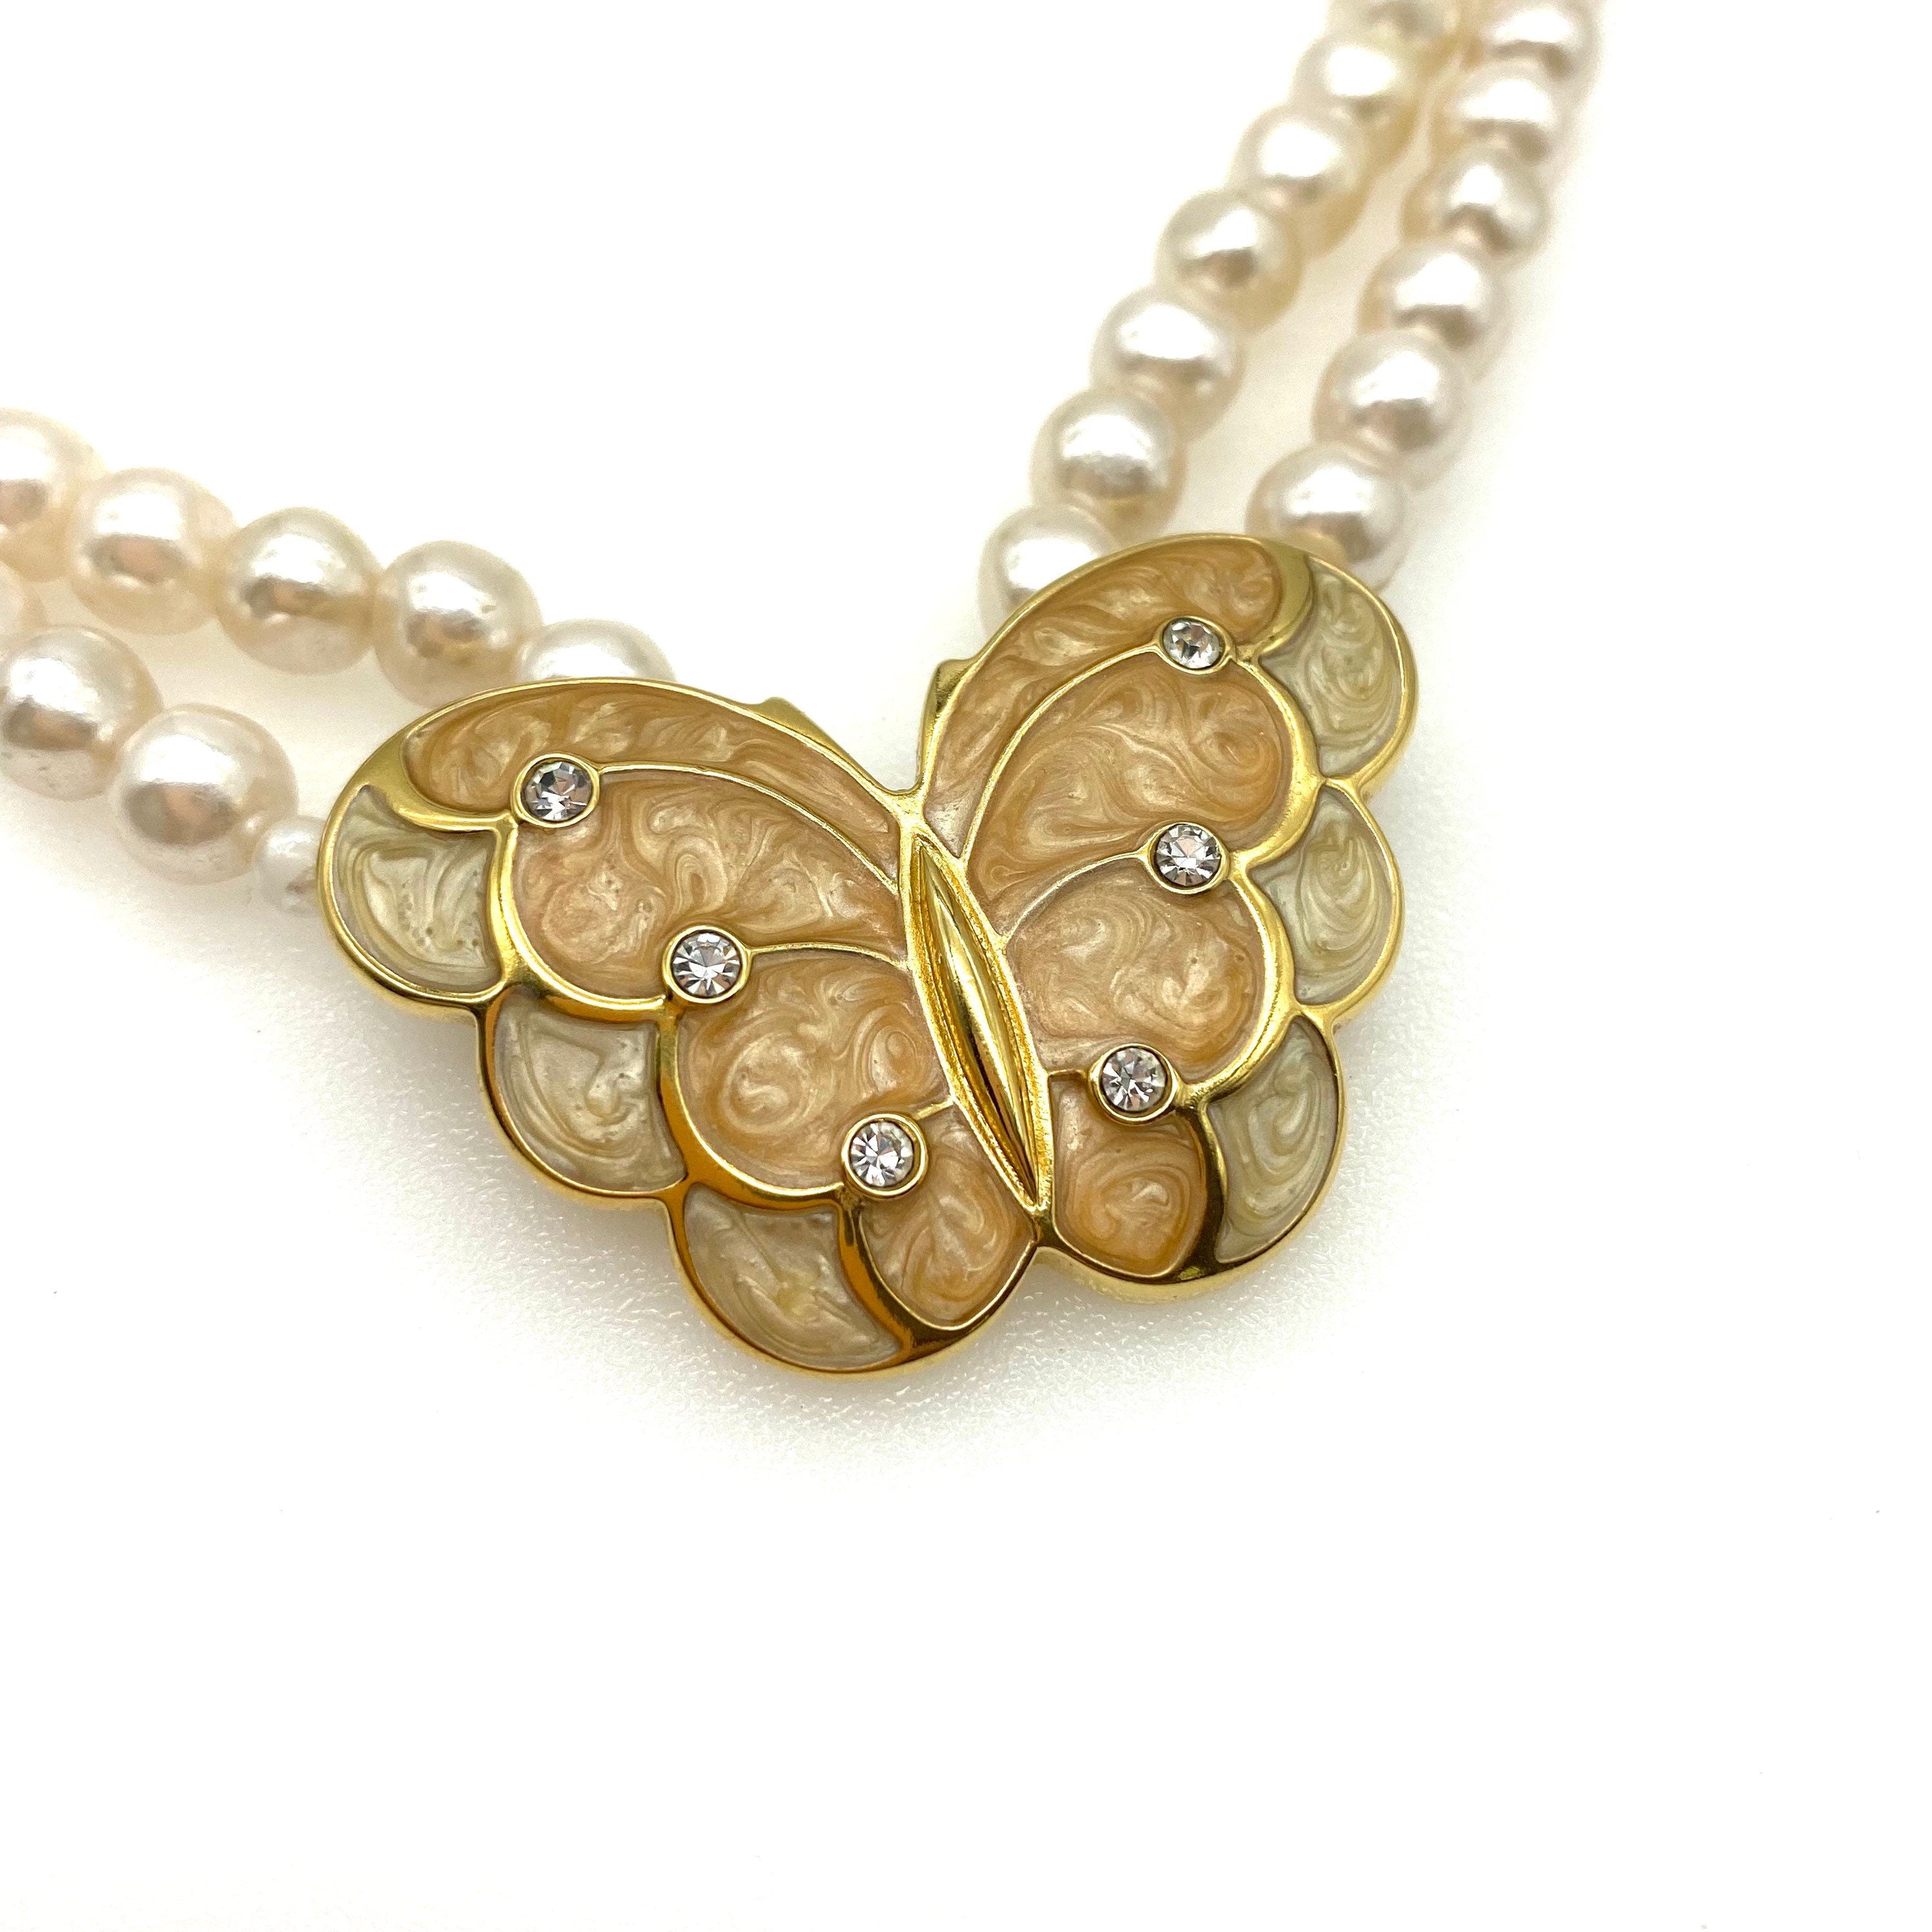 Avon butterfly necklace silver - Gem